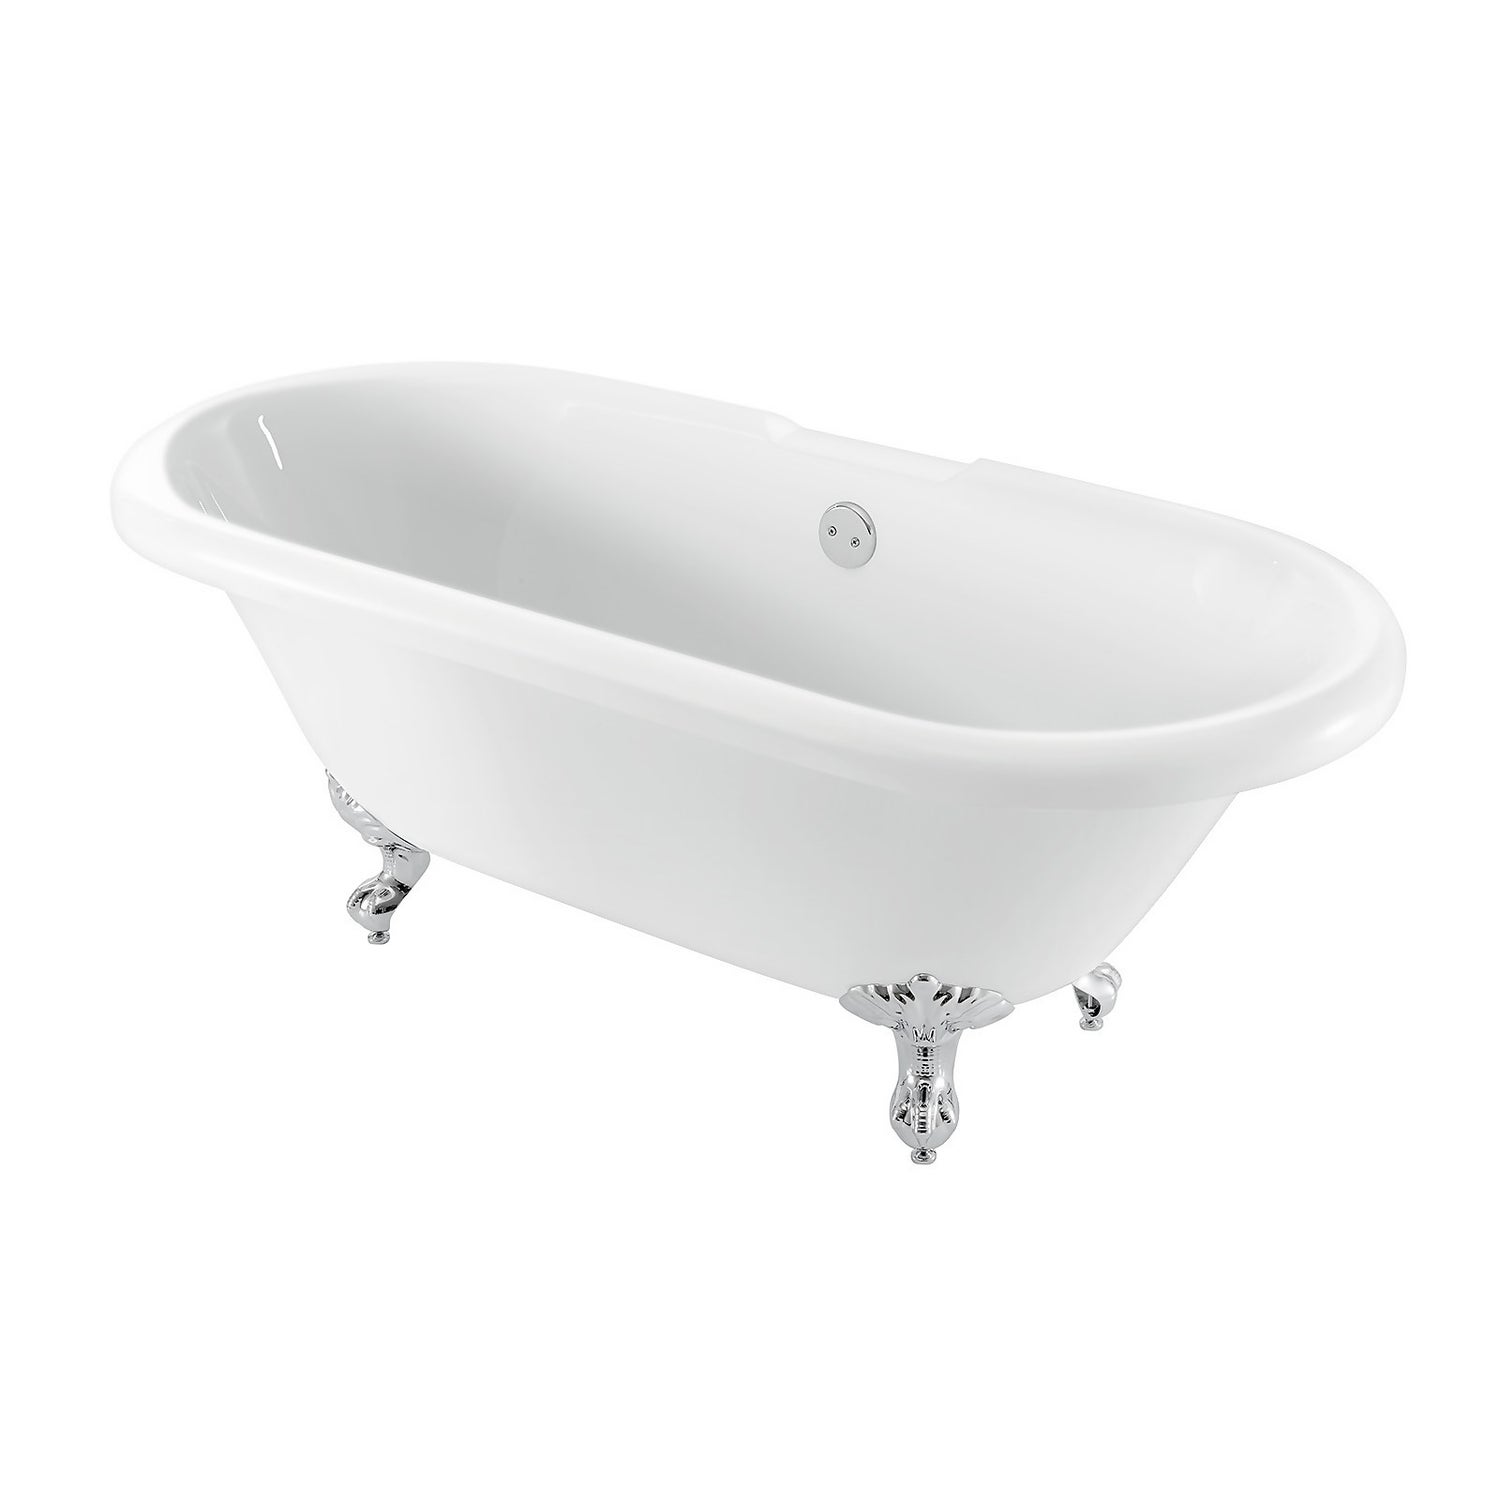 Evesham White Roll Top Bath with Silver Feet